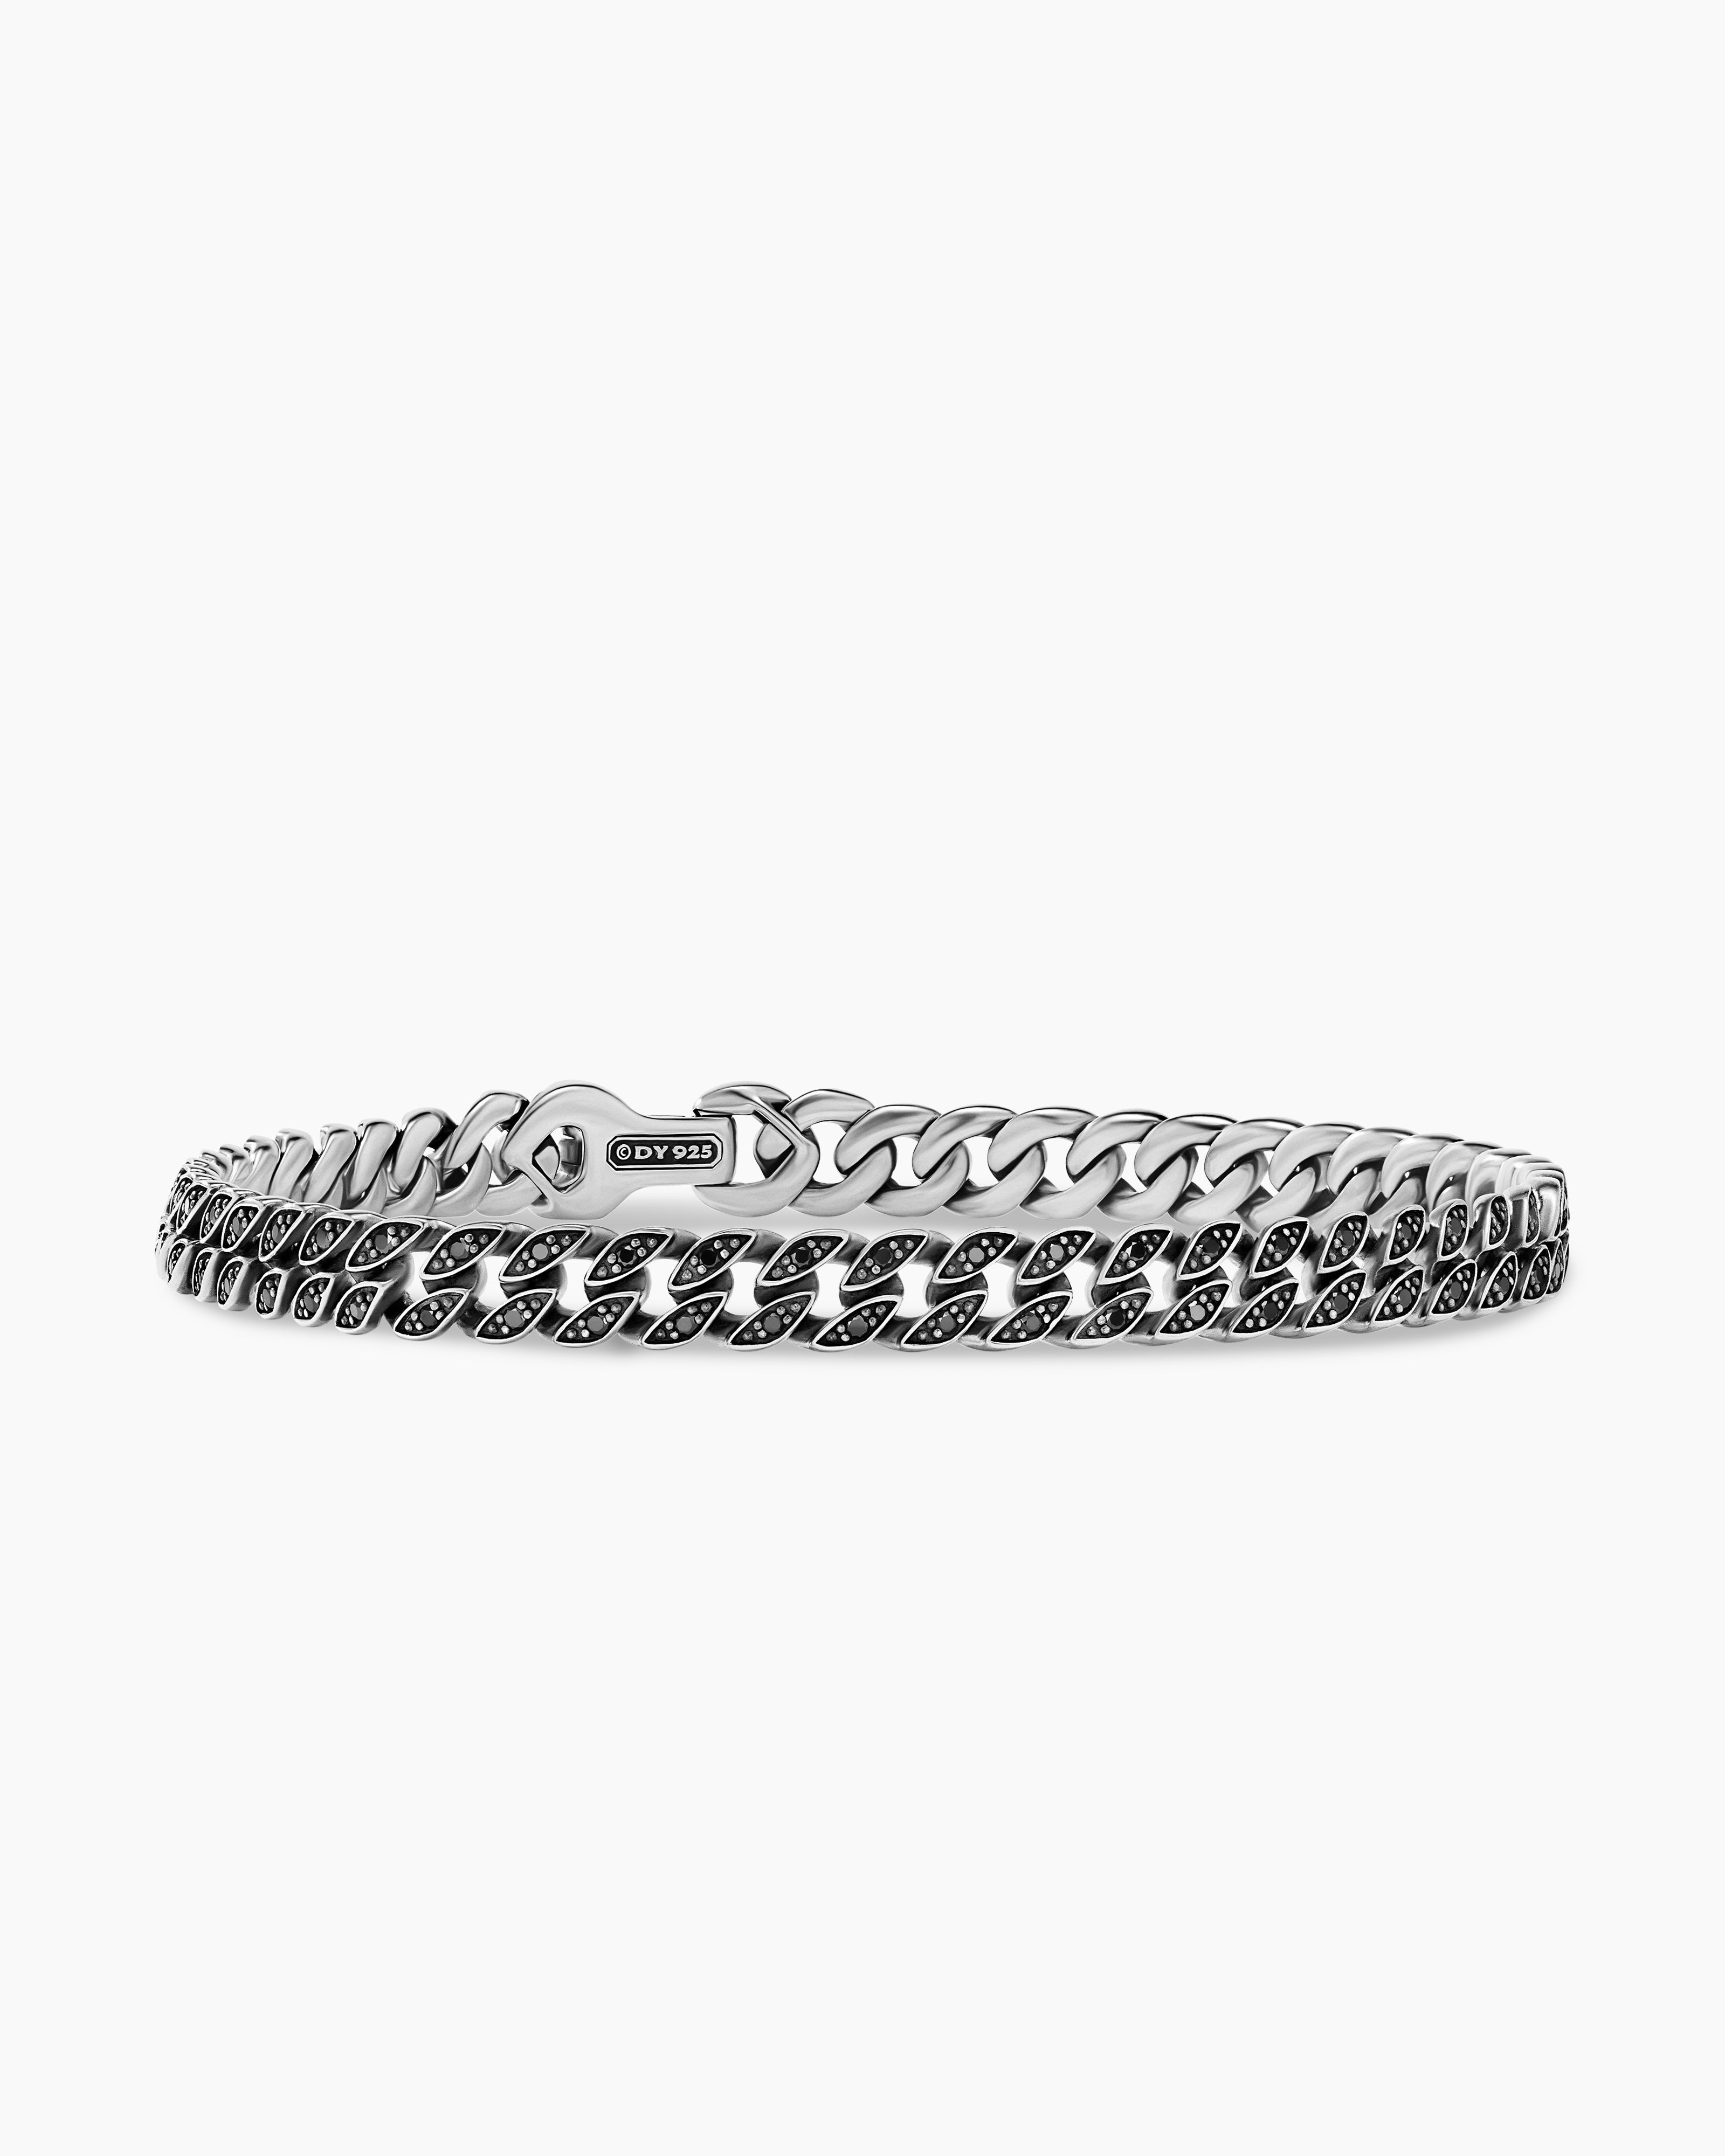 David Yurman Curb Chain Bracelet in Sterling Silver with Black Diamonds